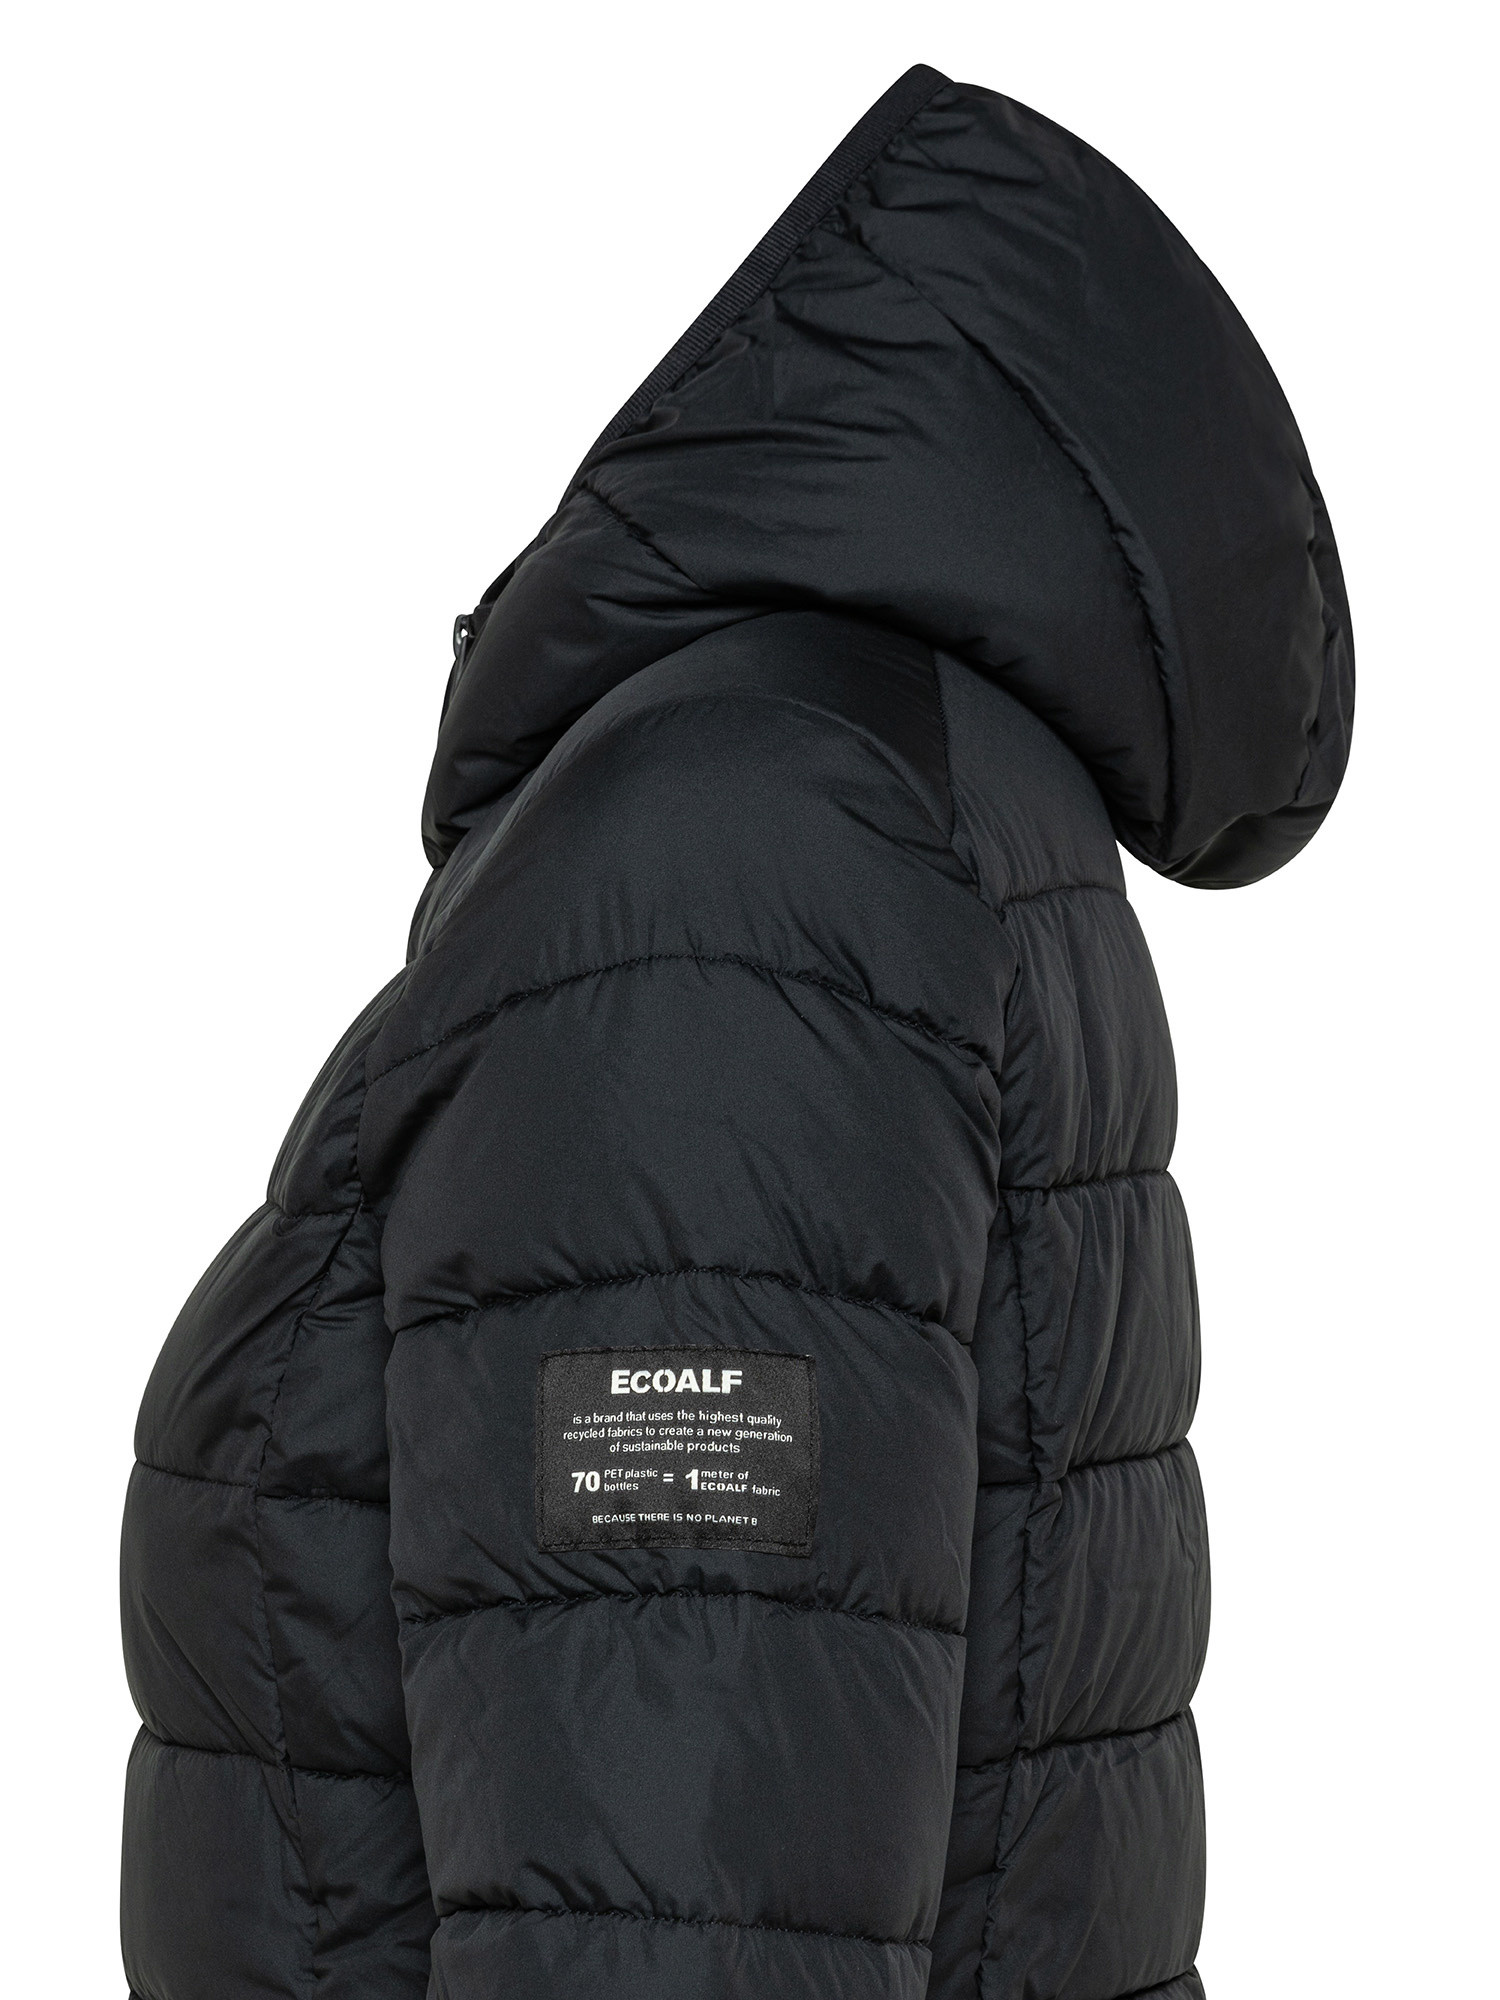 Ecoalf - Waterproof Asp down jacket with logo, Black, large image number 2